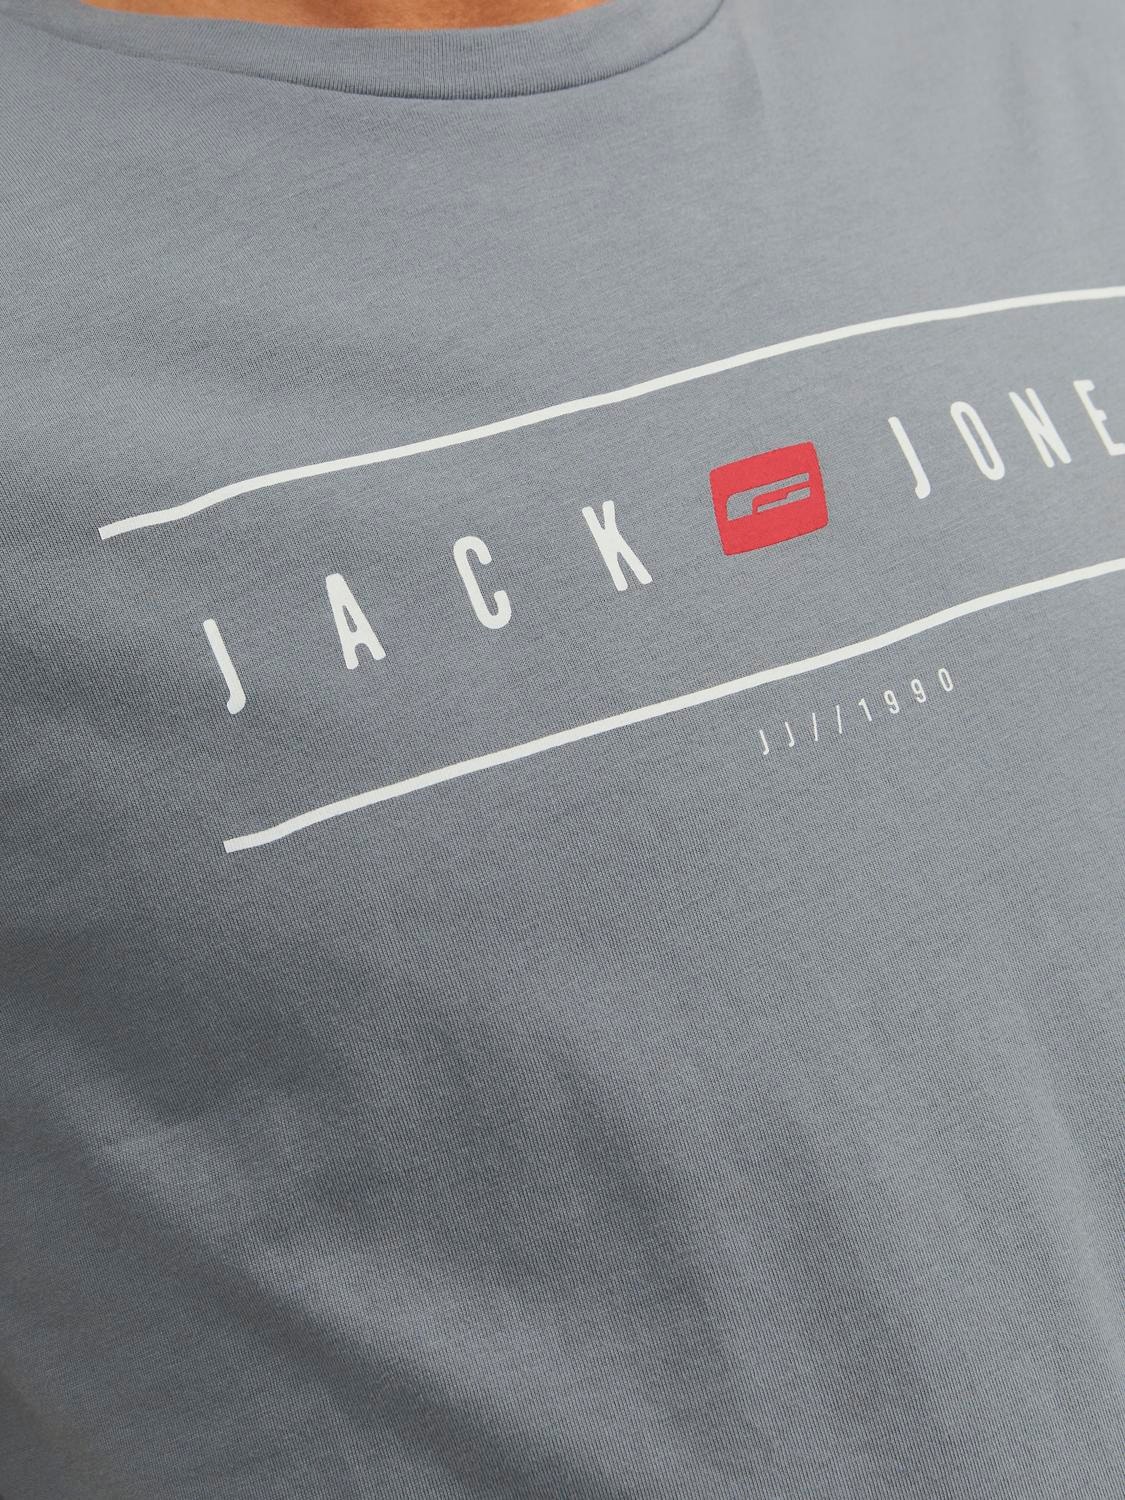 Jack & Jones Logo Crew neck T-shirt -Sedona Sage - 12236510